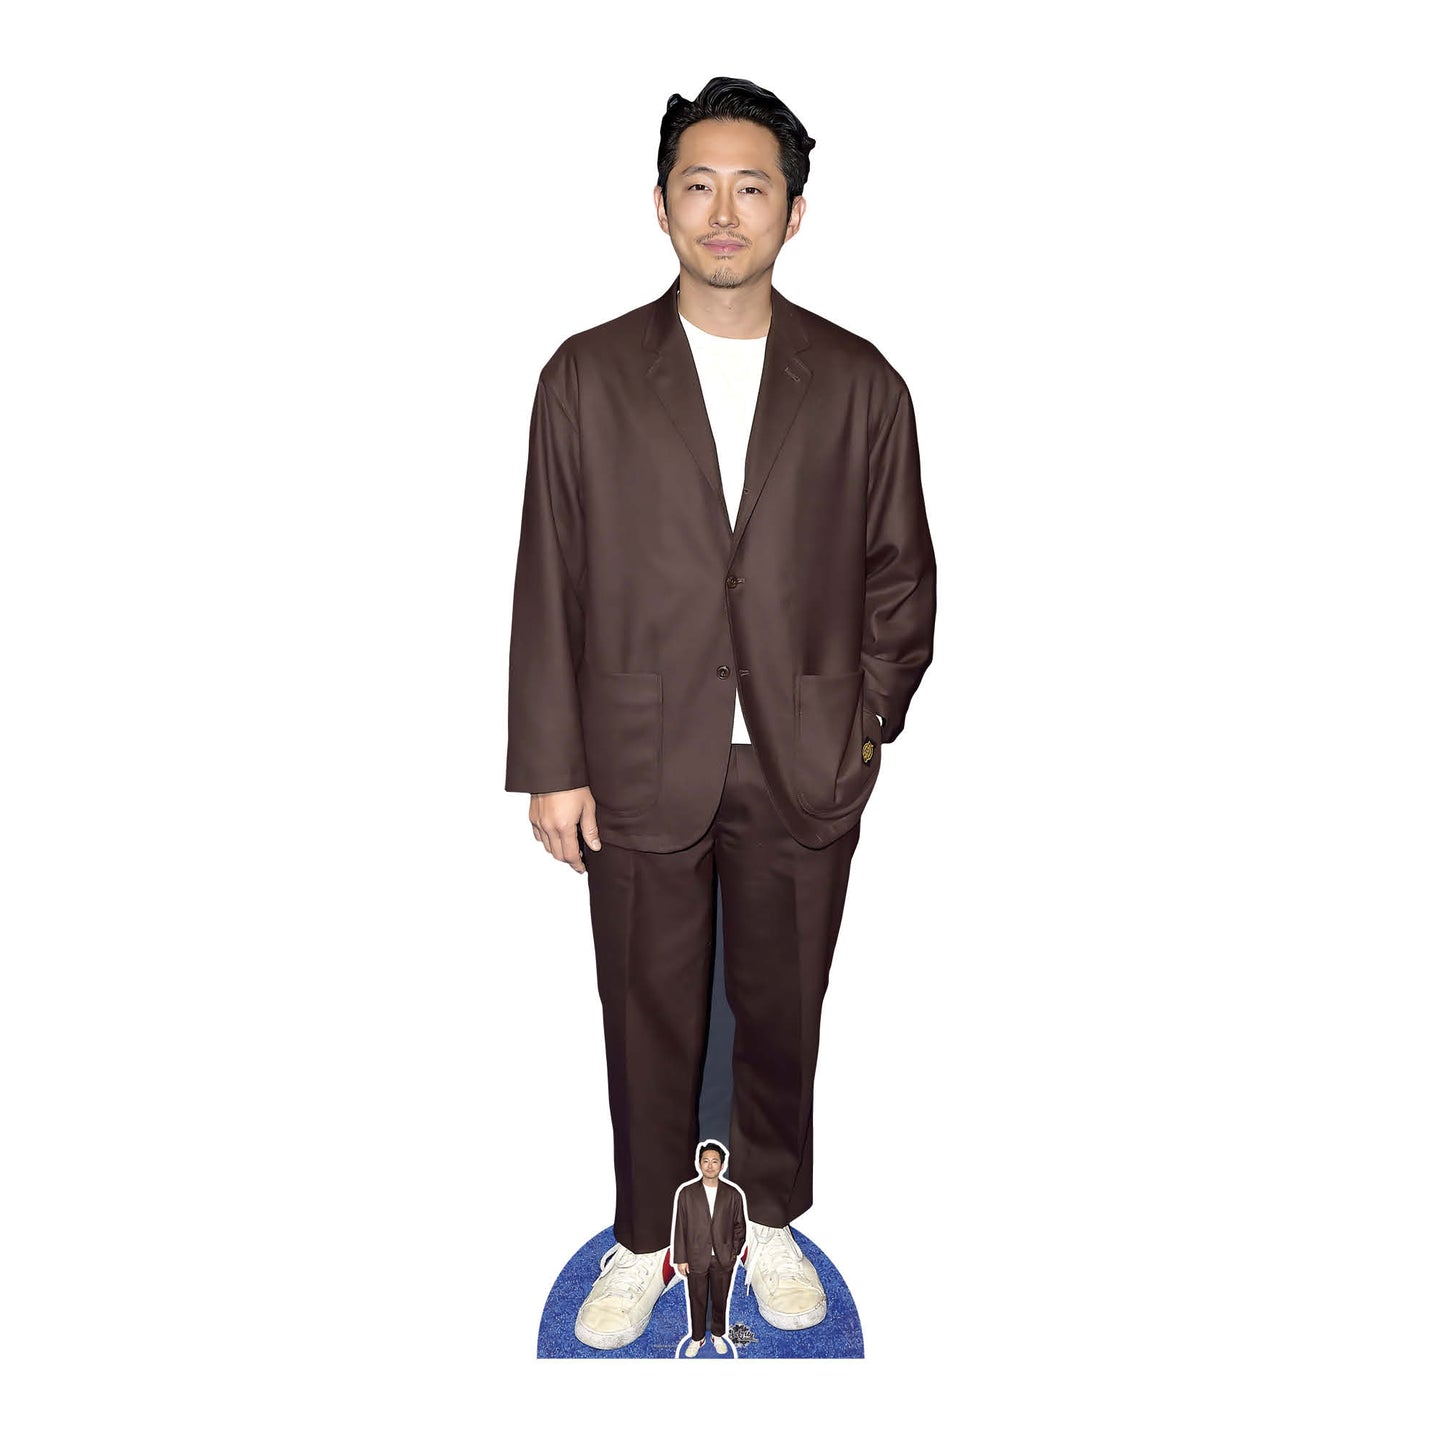 CS1060 Steven Yeun Height 177cm Lifesize Cardboard Cut Out With Mini